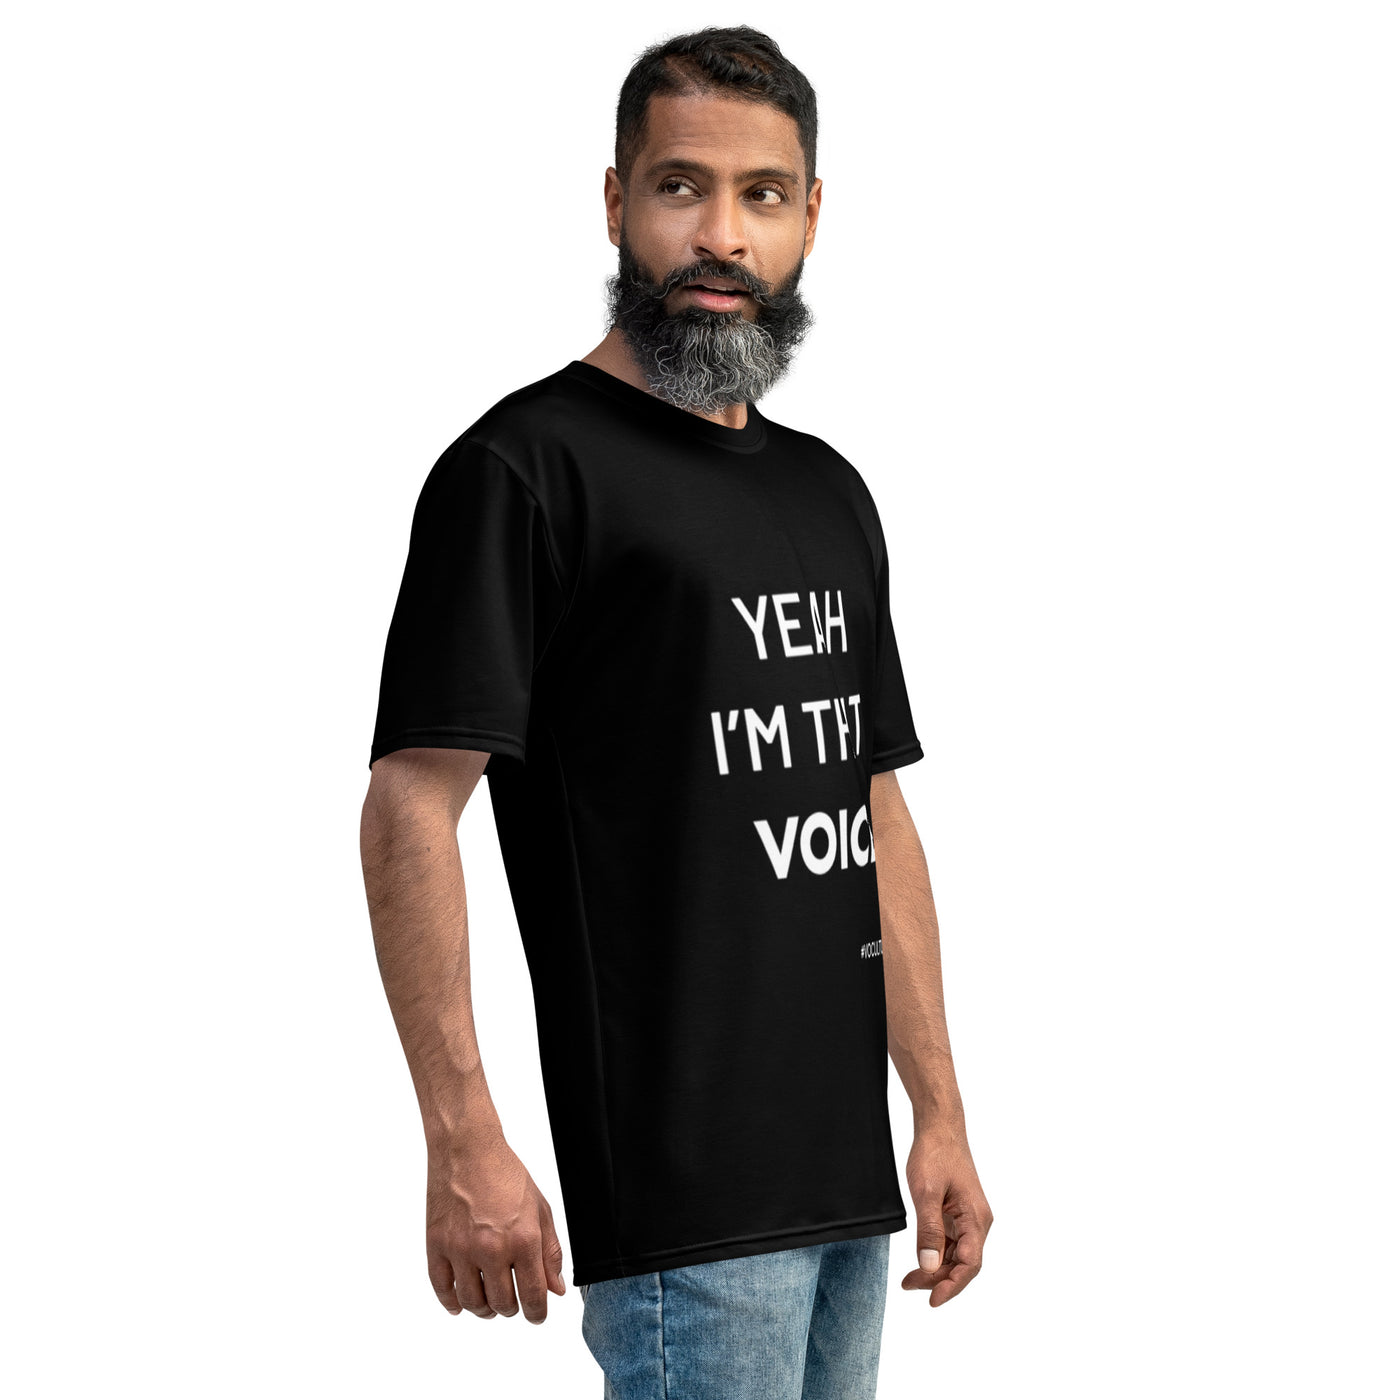 YEAH I'm that voice Male t-shirt black